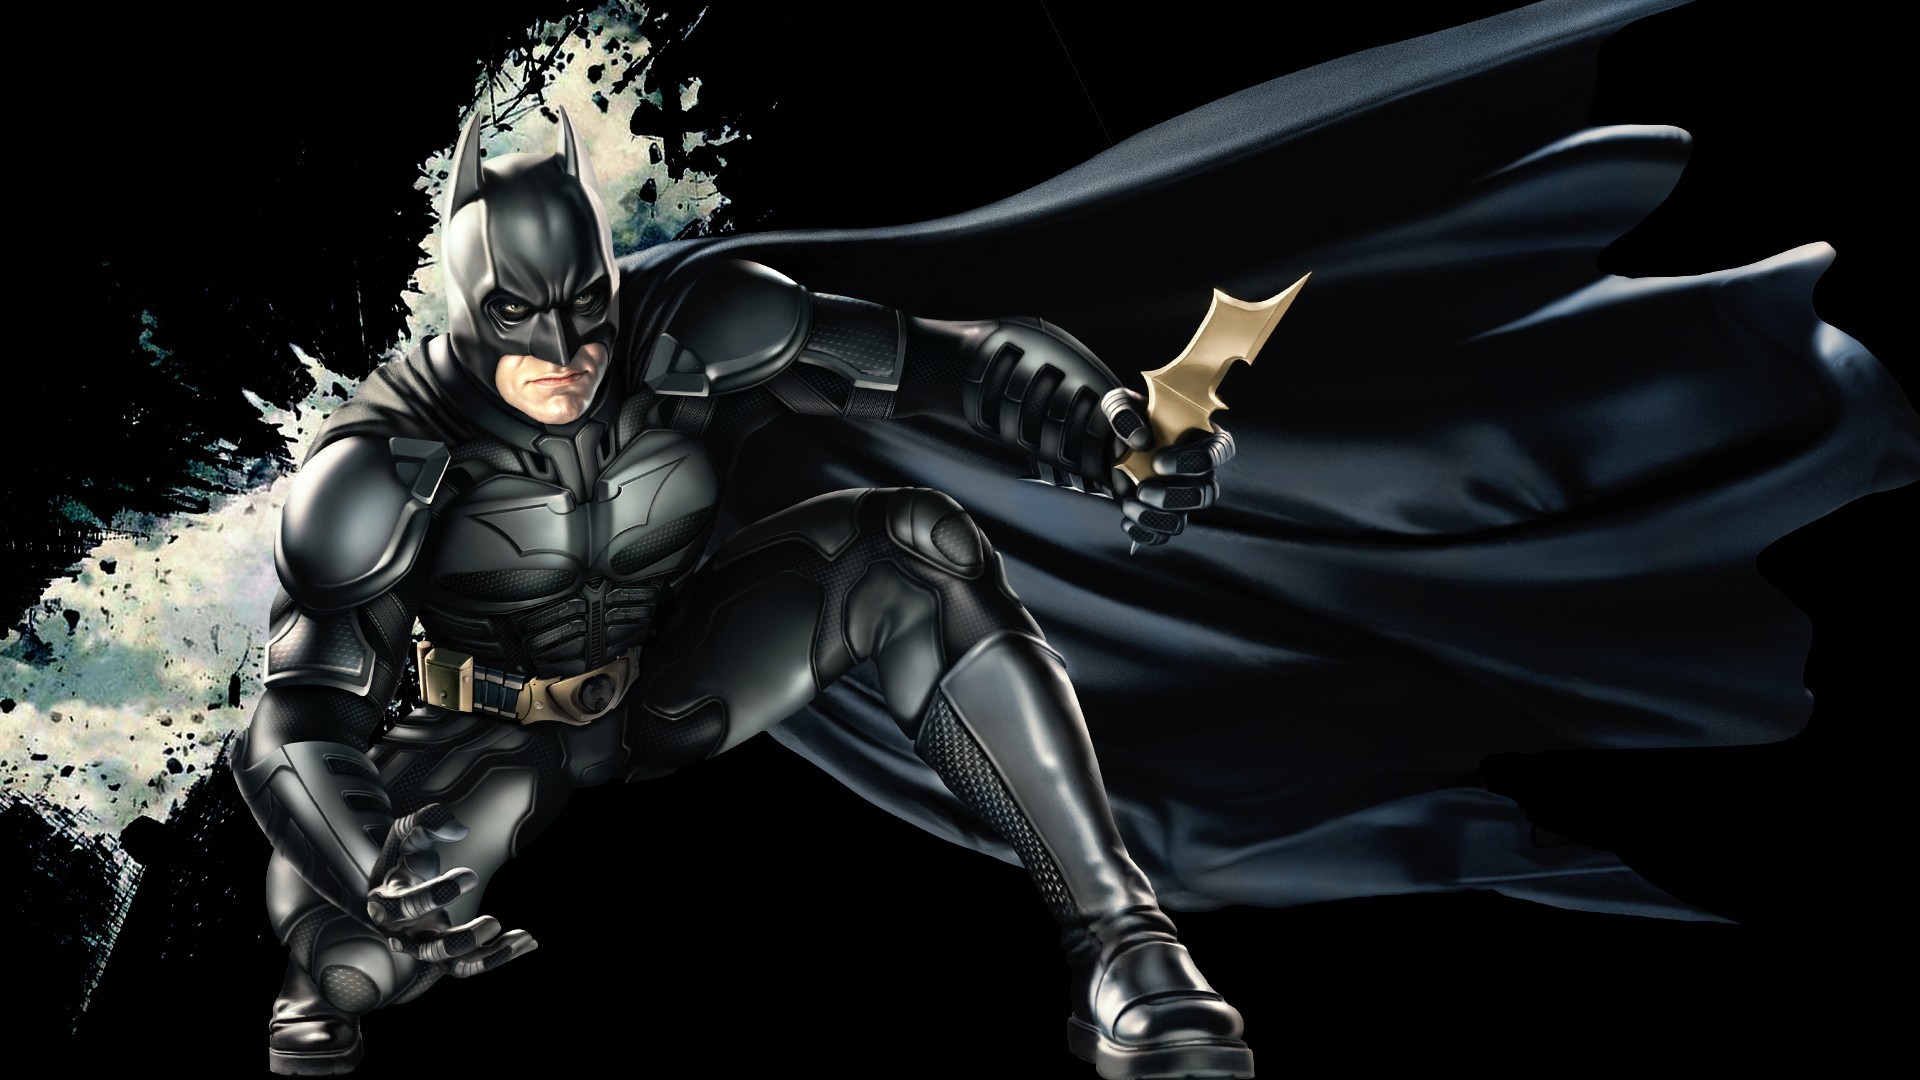 HD Wallpaper 1080p With Superheroes Batman Of